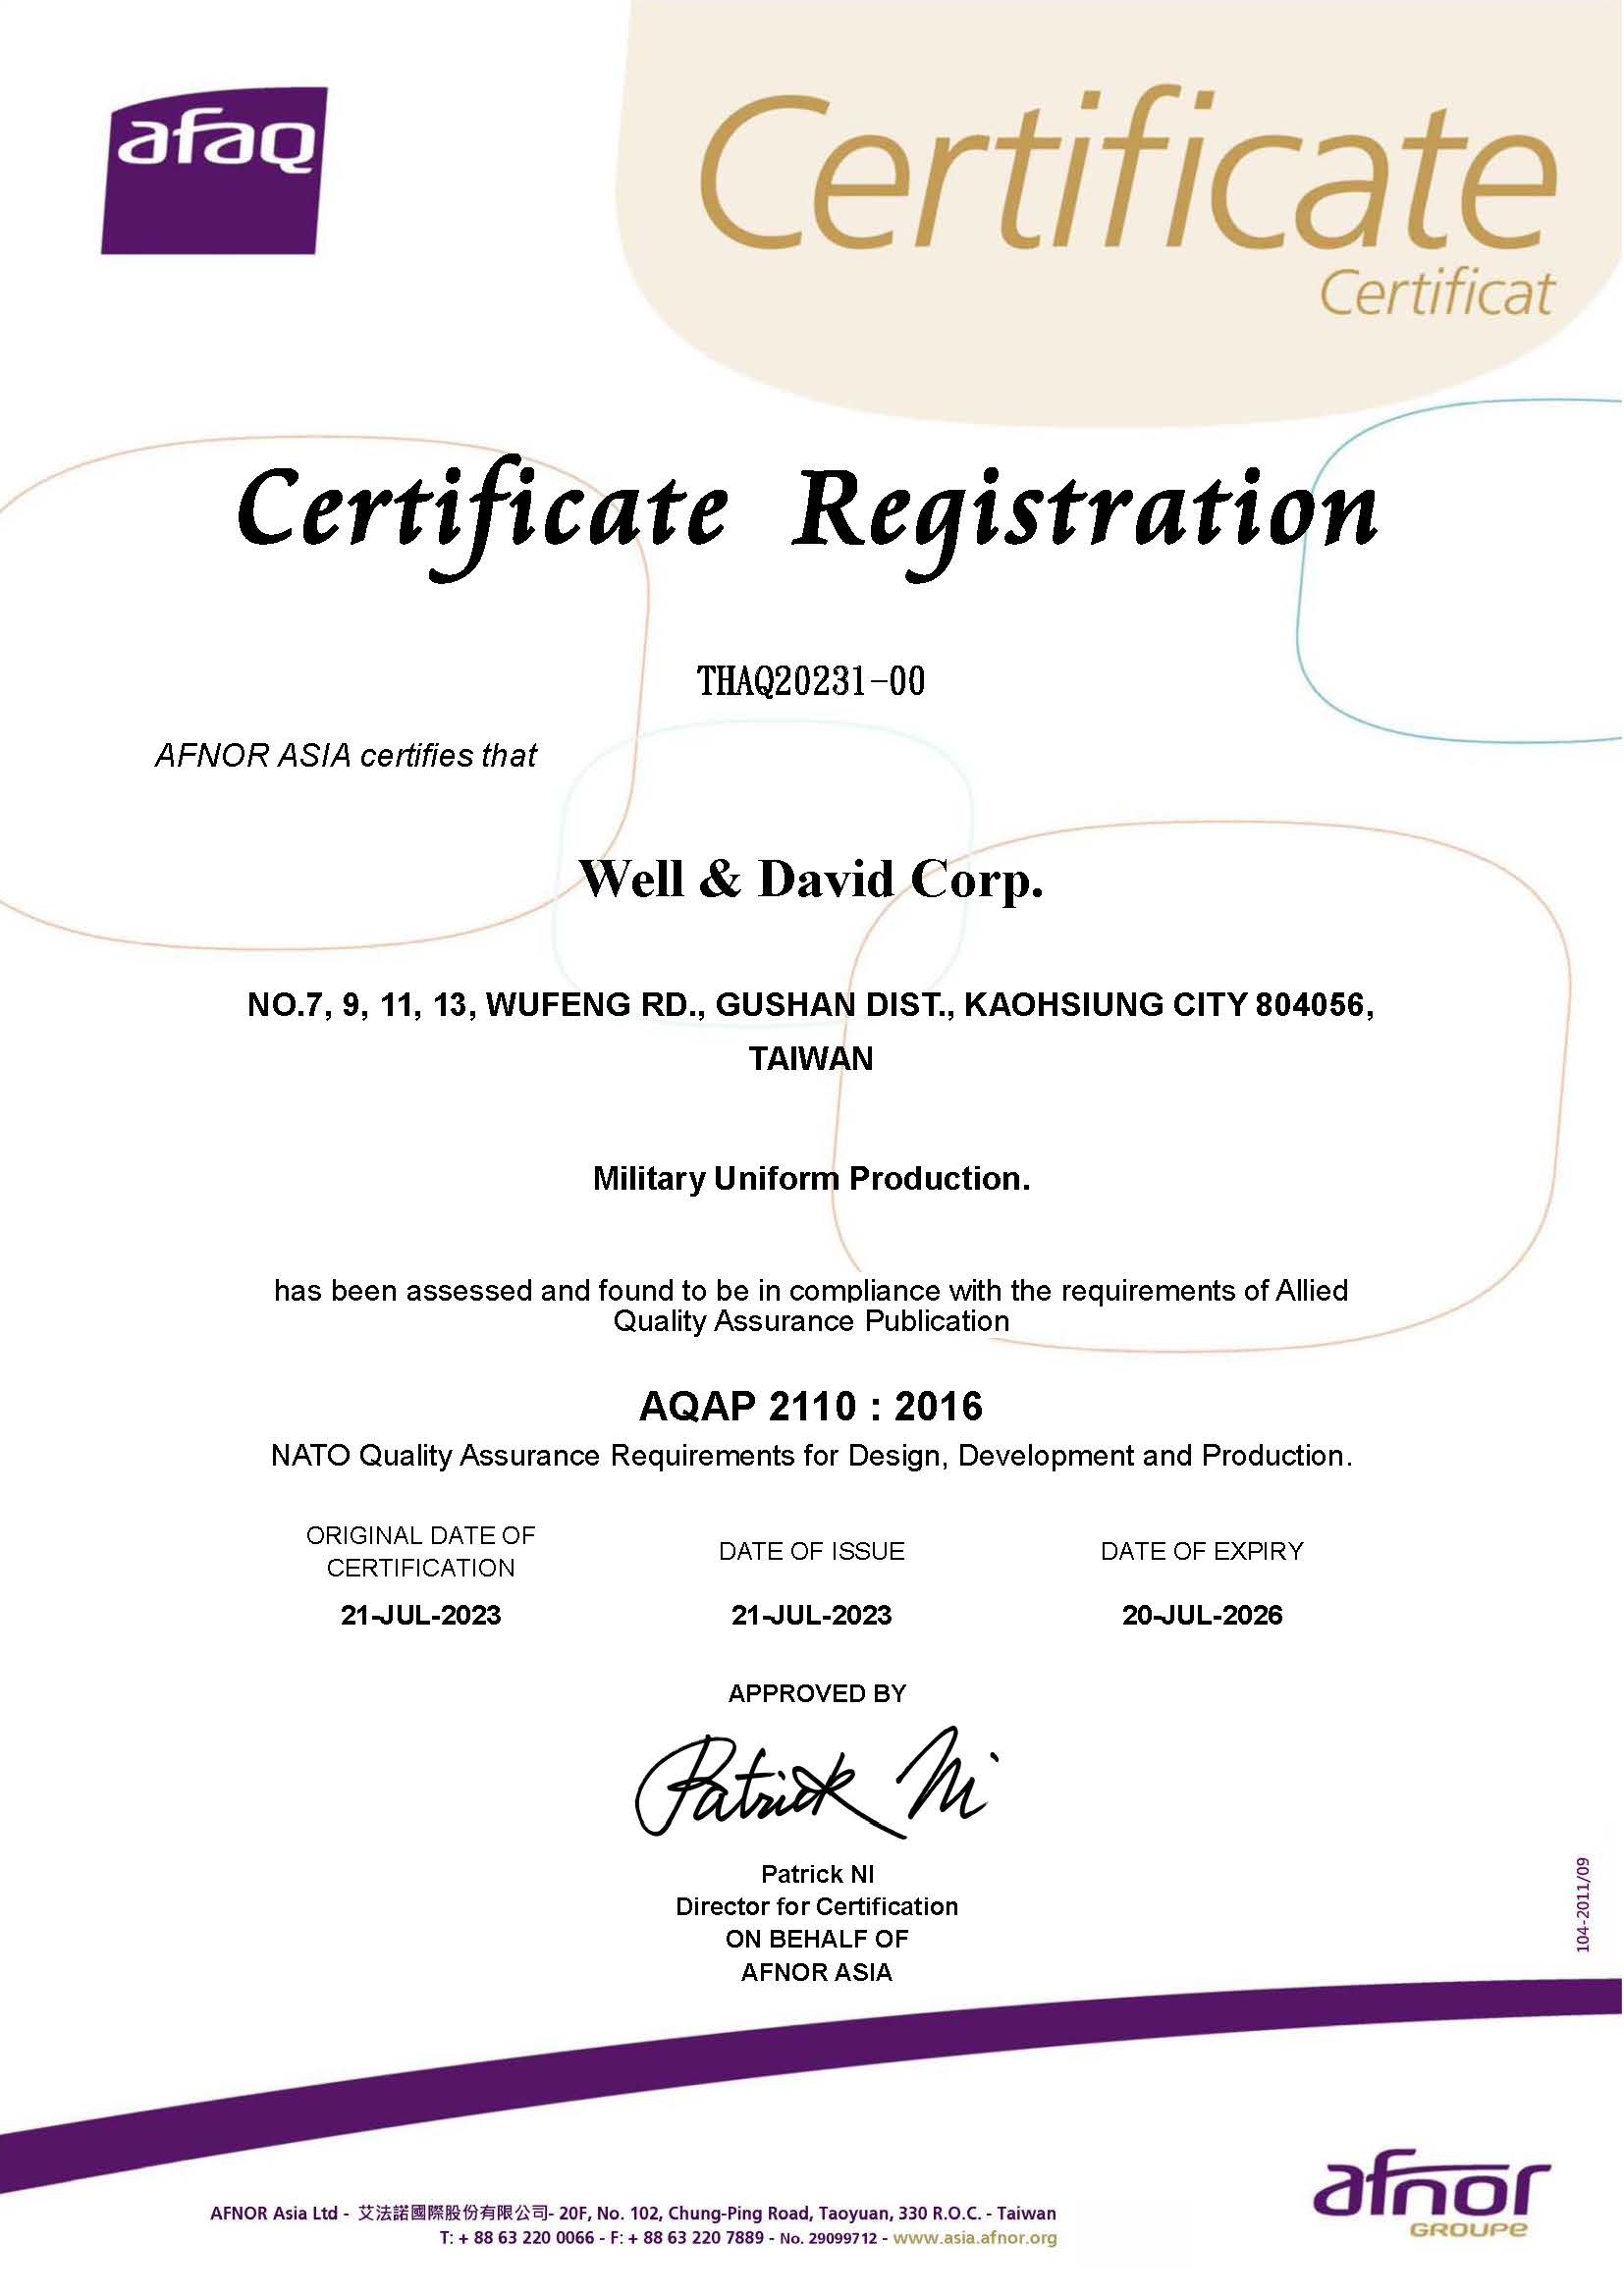 AQAP 2110 : 2016 certifiering